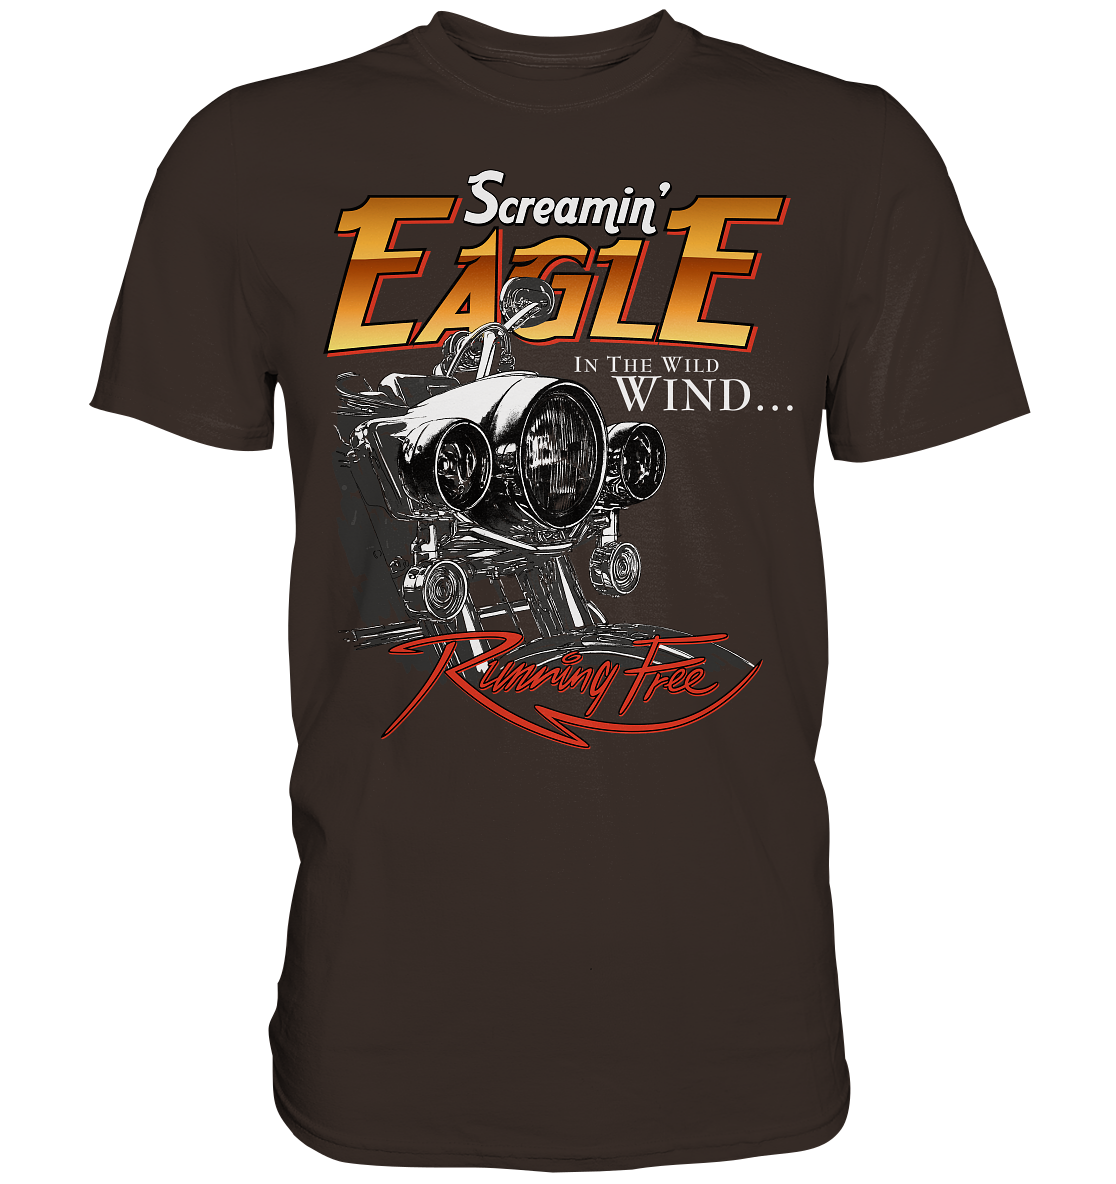 Screamin eagle, running free - Premium unisex Shirt